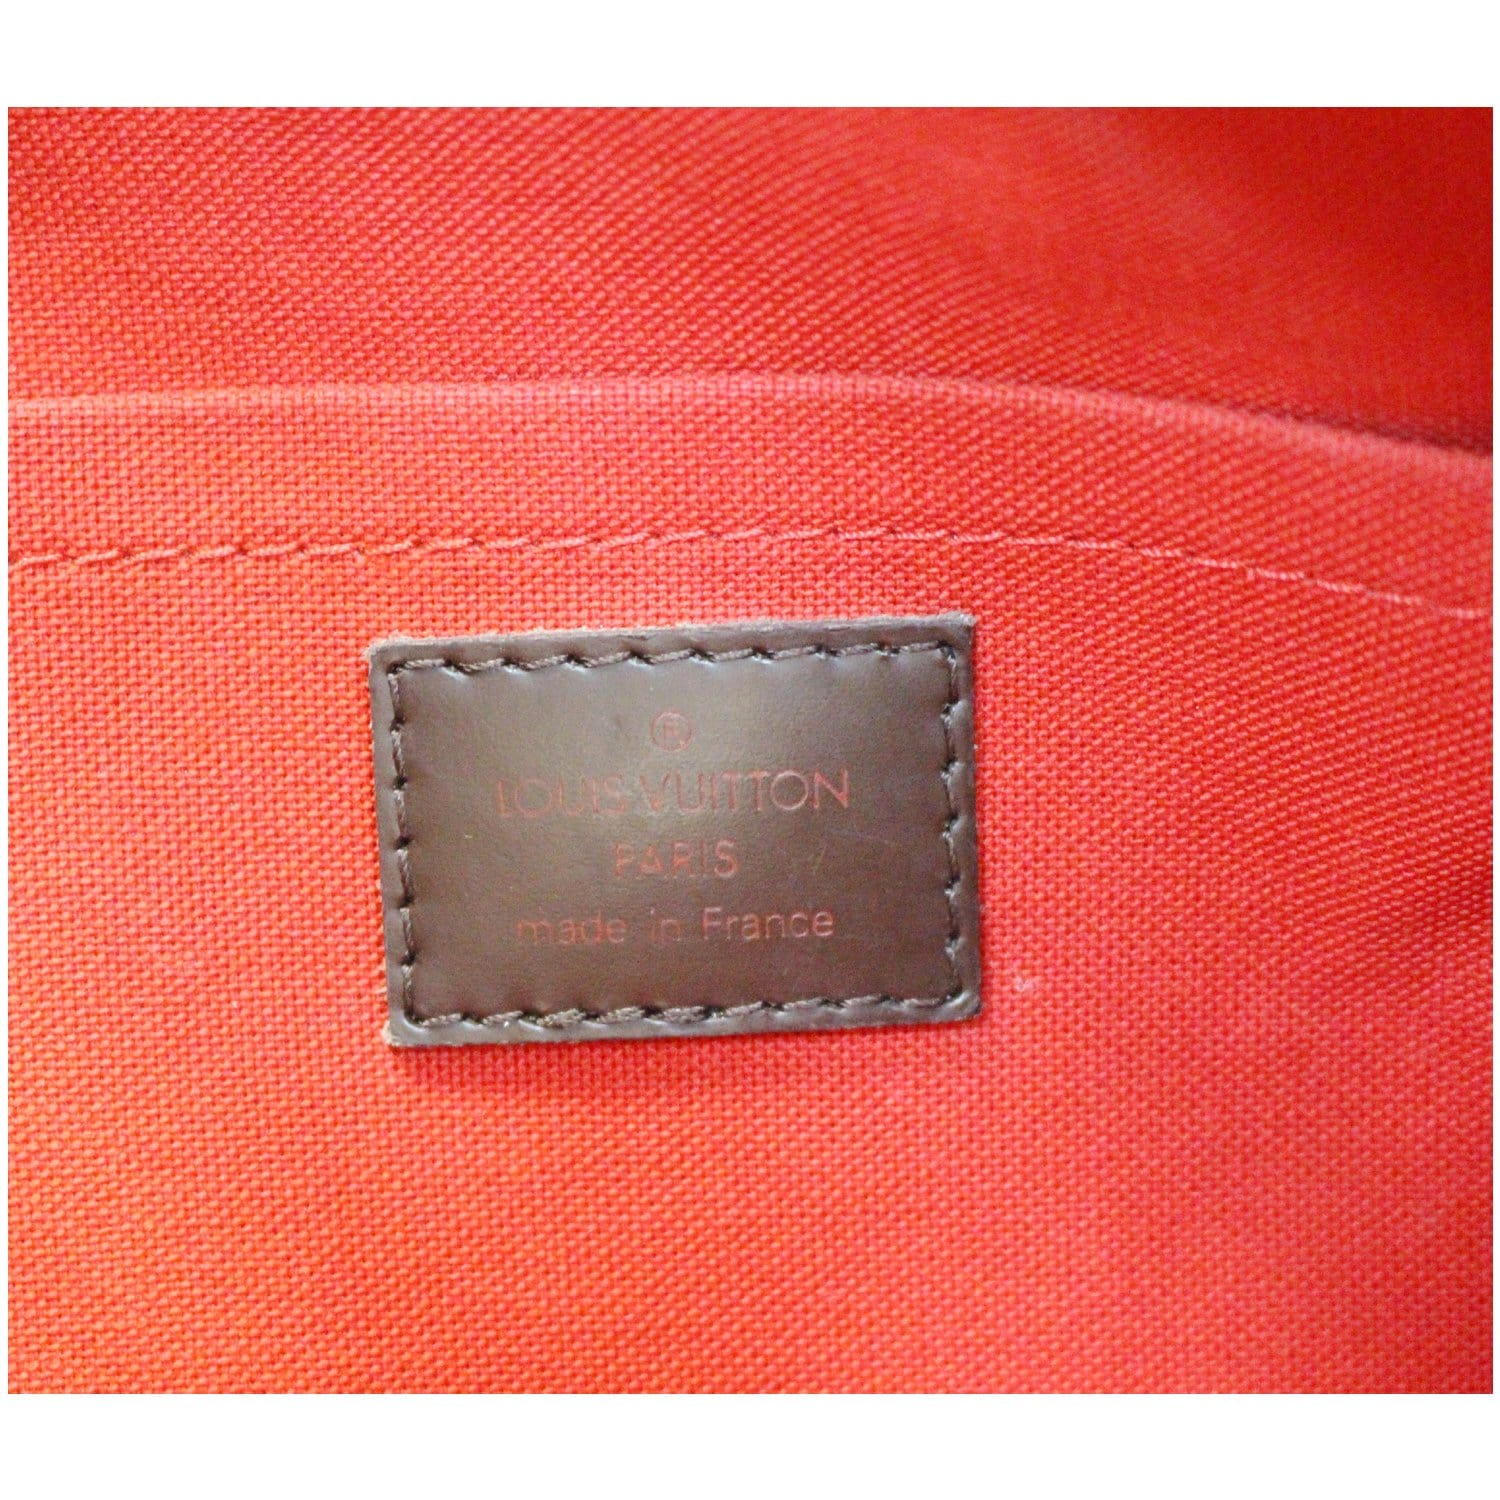 Louis Vuitton 2011 Pre-owned Damier Ebene Thames GM Shoulder Bag - Brown